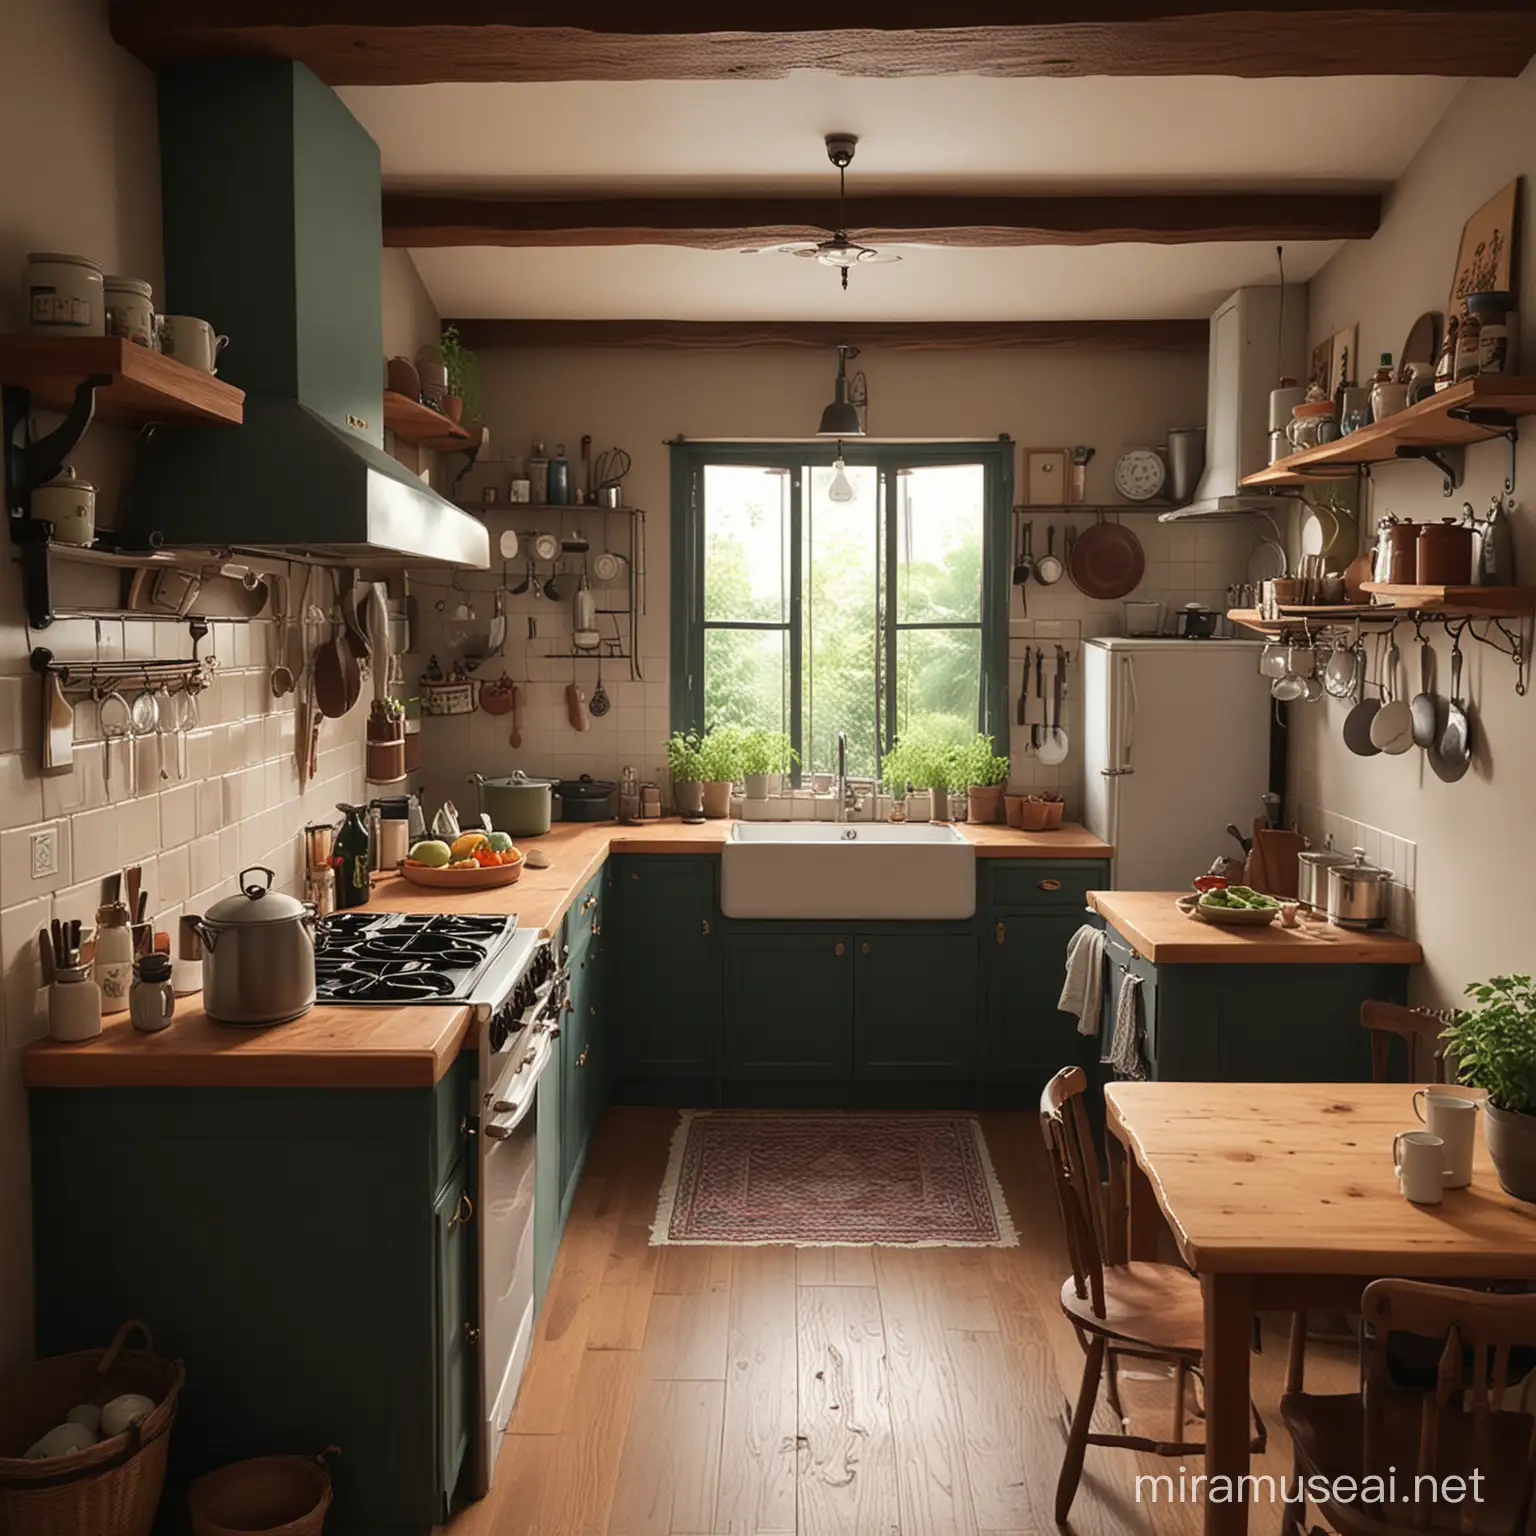 Small kitchen design, inspiration from studio ghibli, dark cottagecore, airy, cozy